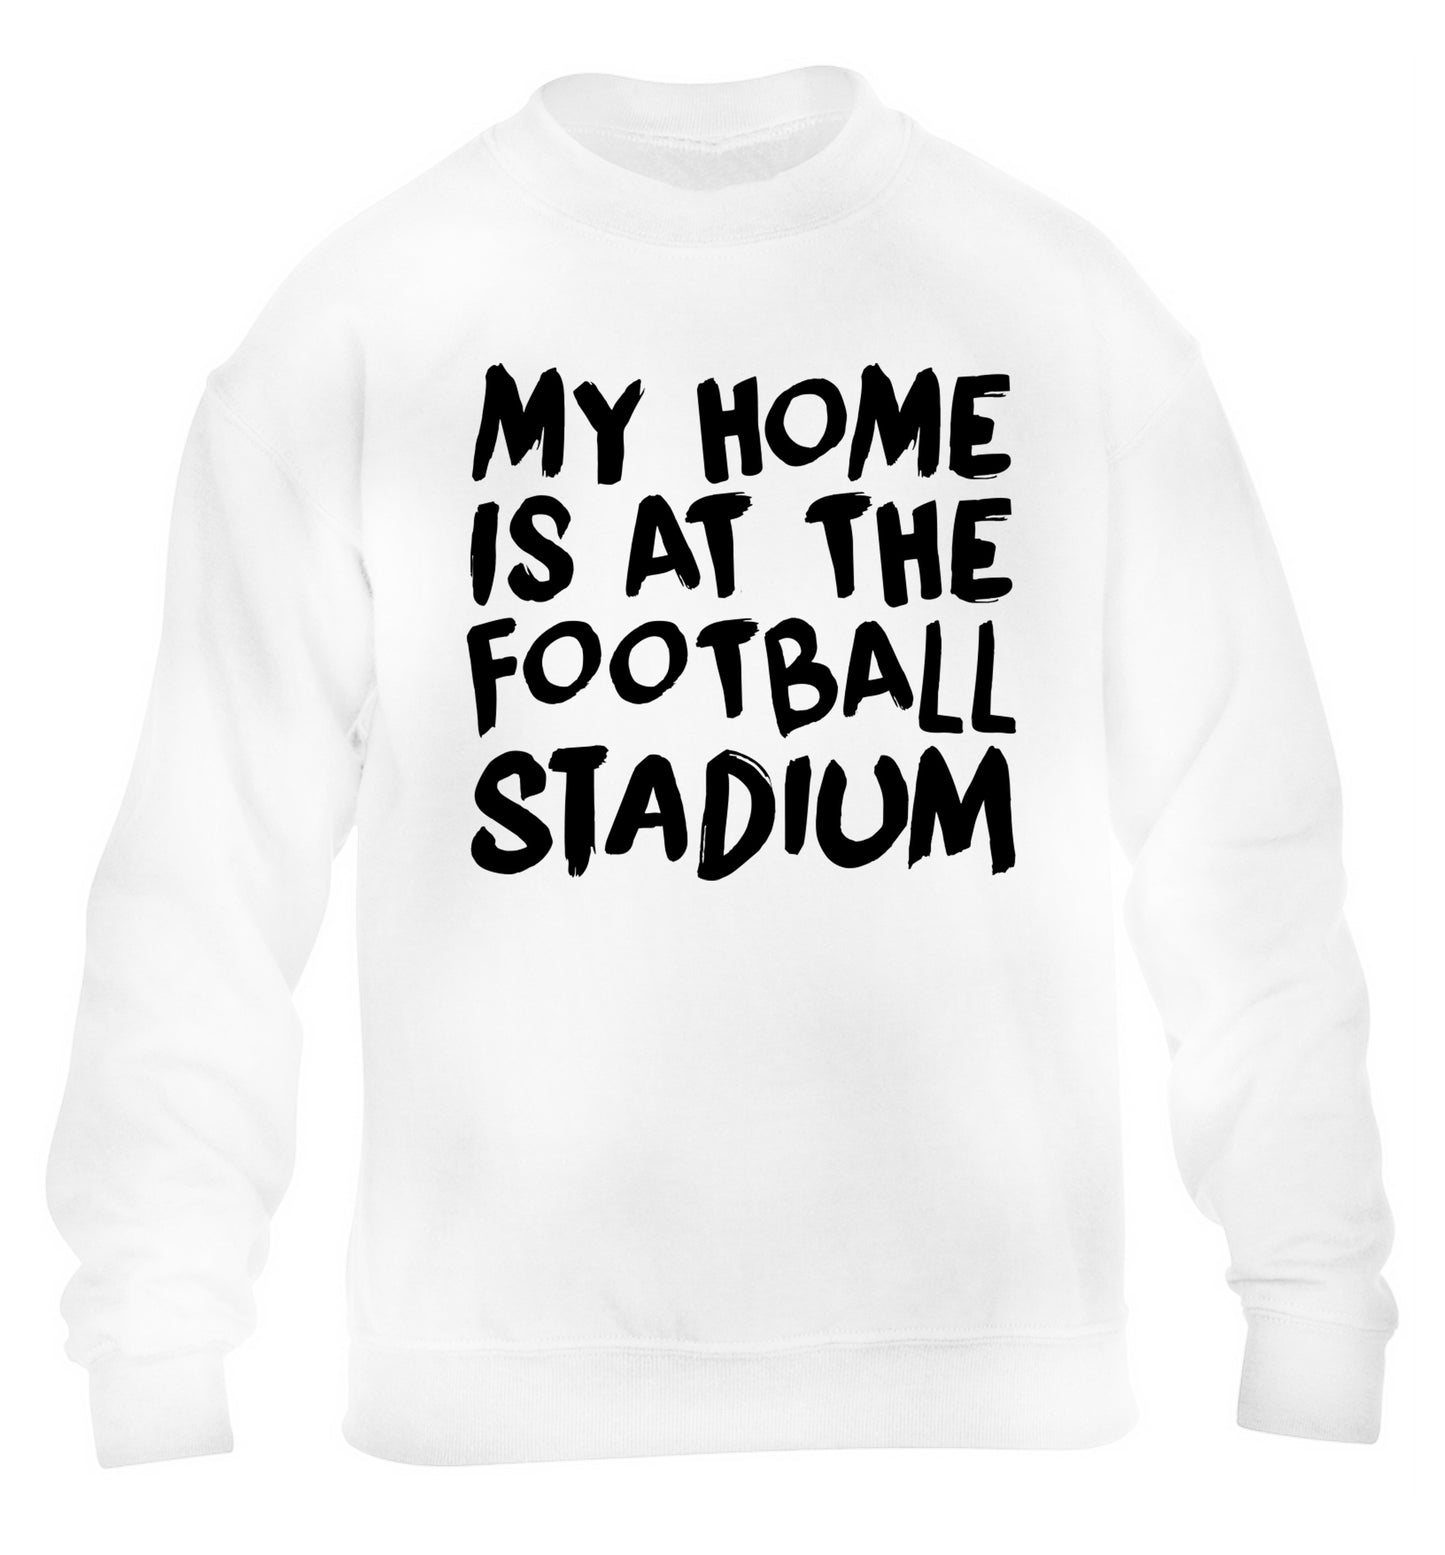 My home is at the football stadium children's white sweater 12-14 Years